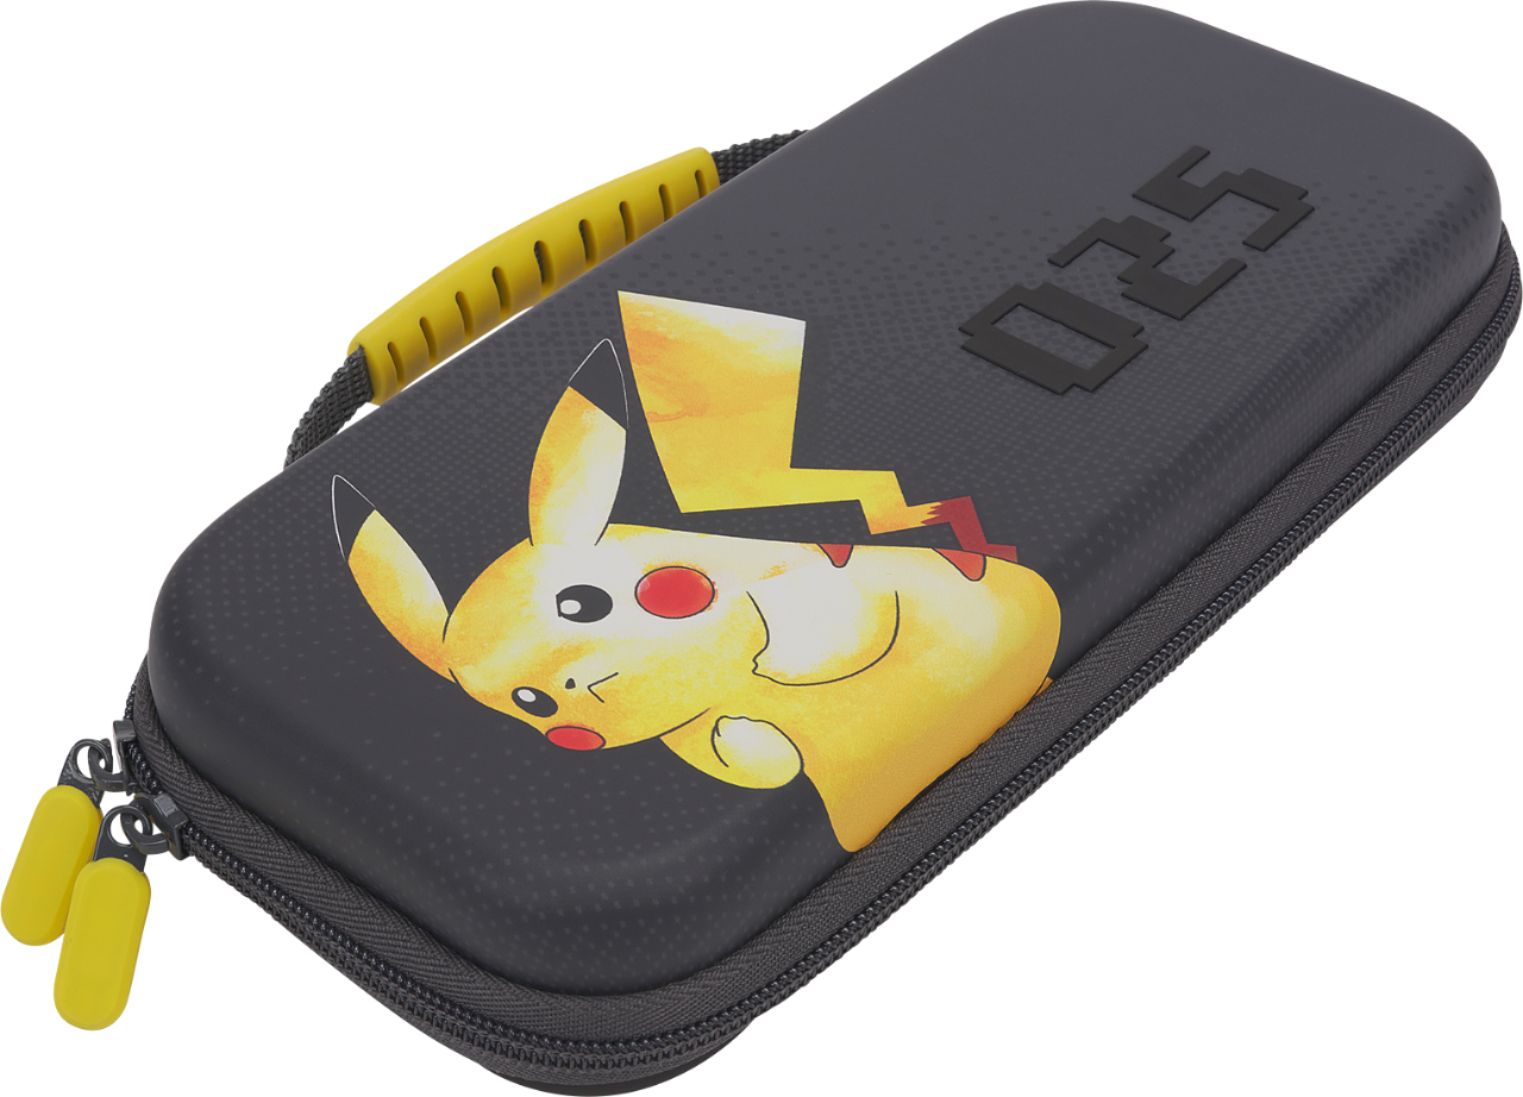 Angle View: PowerA Protection Case for Nintendo Switch - OLED Model, Nintendo Switch or Nintendo Switch Lite - Pikachu 025